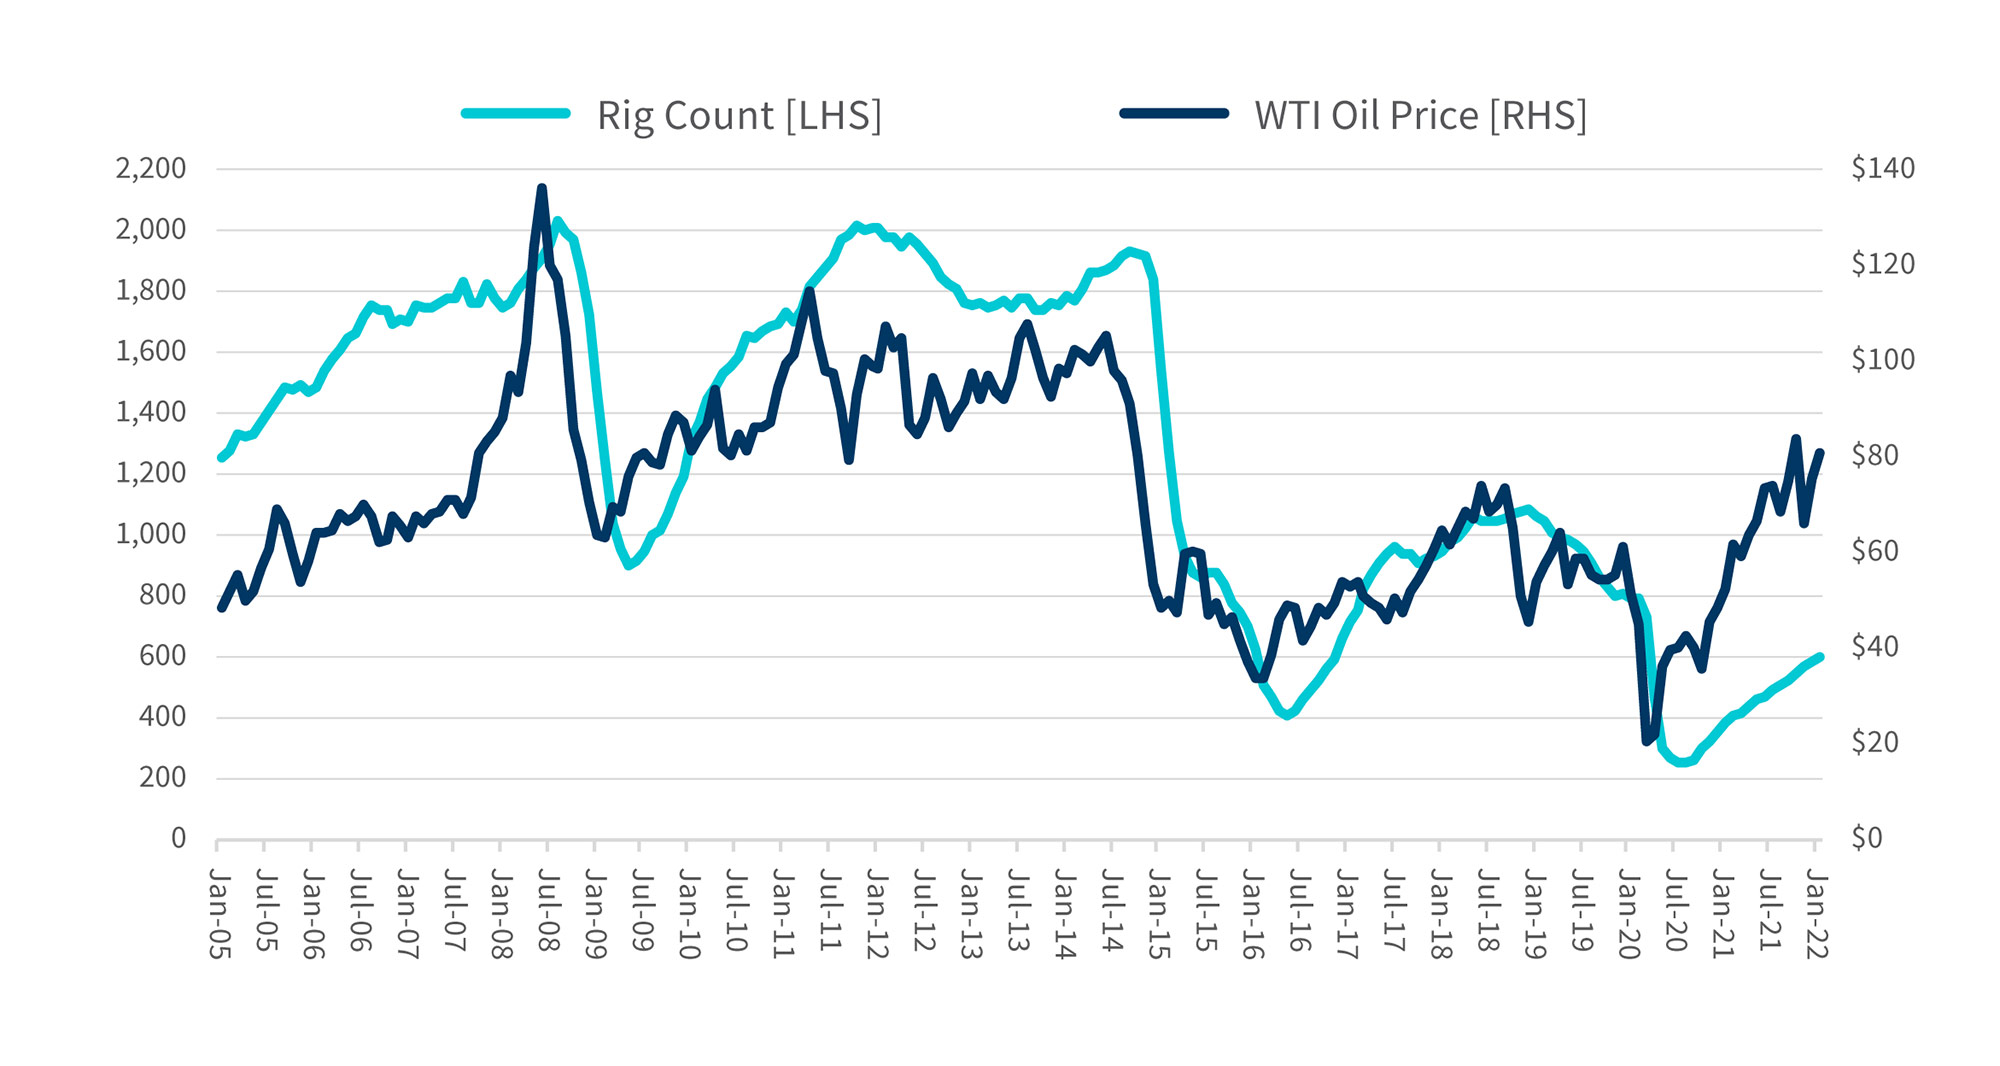 U.S. Rig Count vs. WTI Oil Price